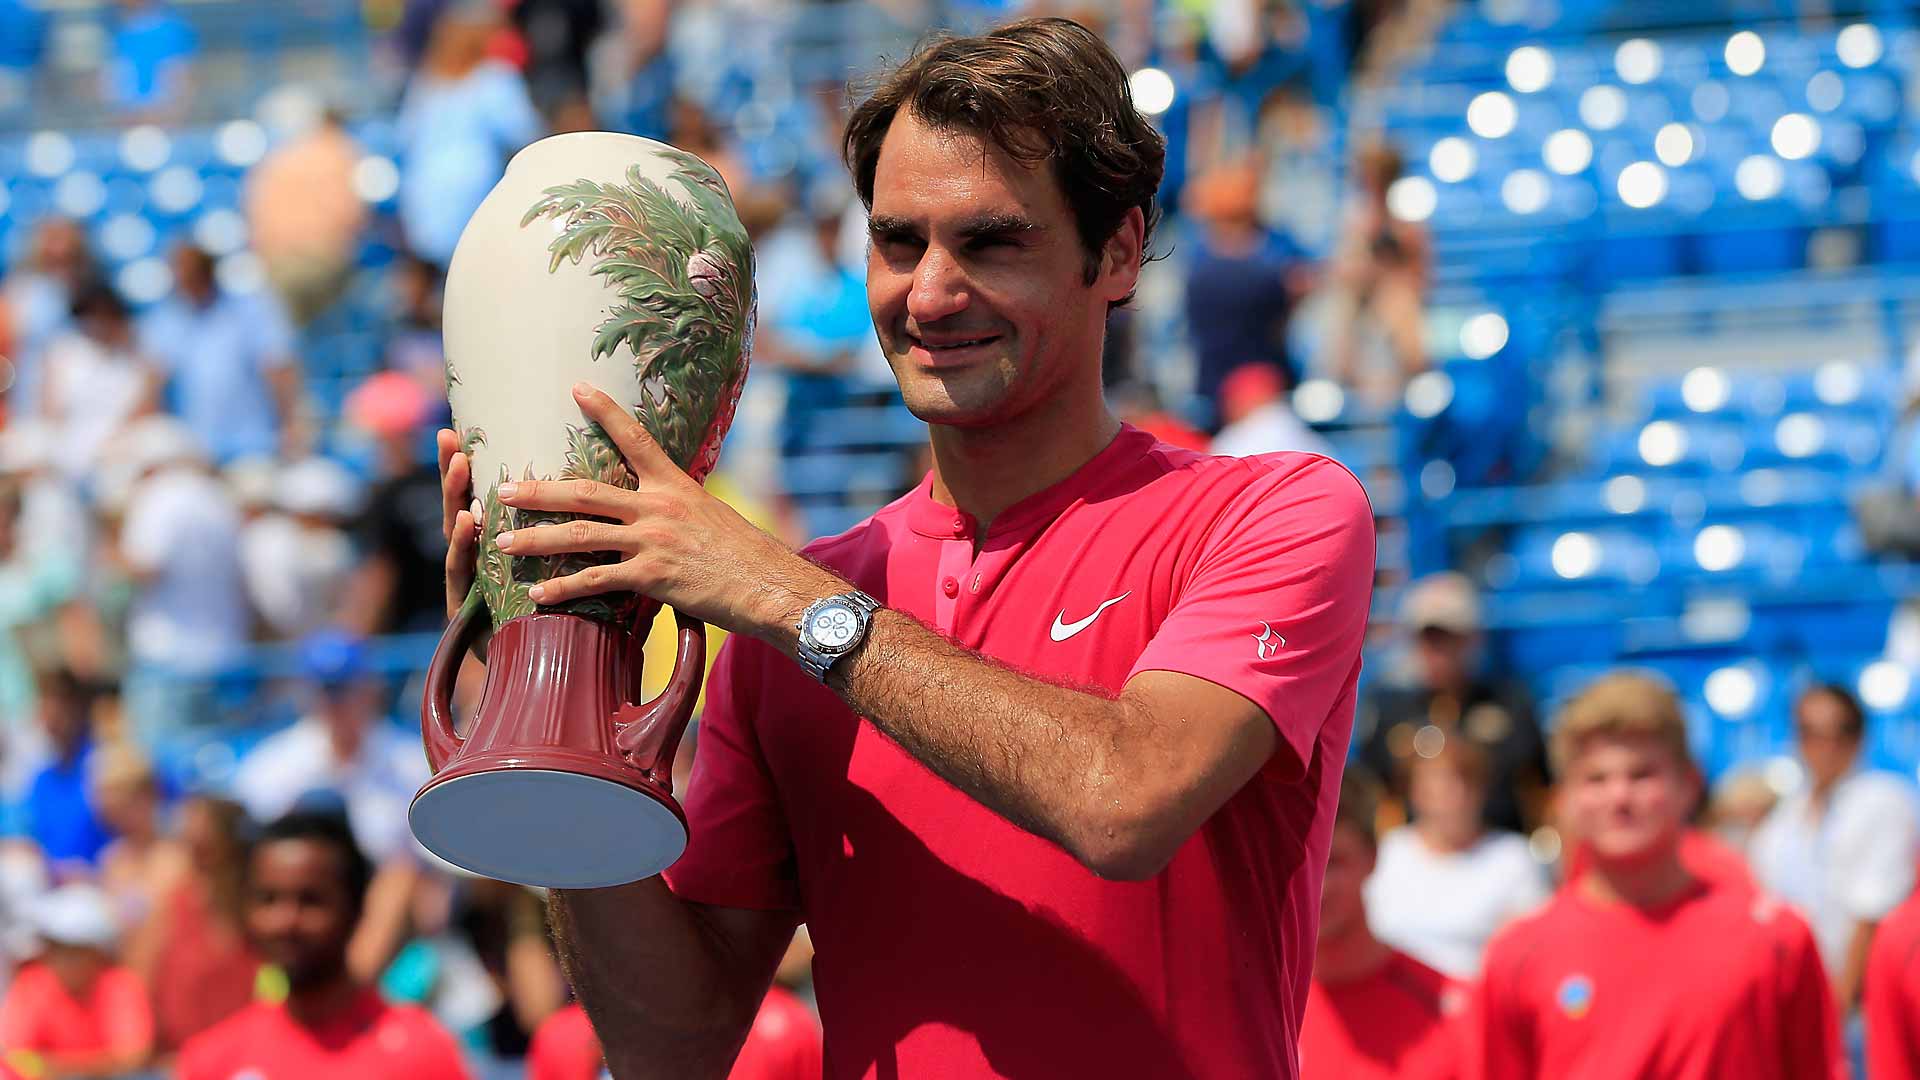 Cincinnati 2015 Final Federer Djokovic | ATP World Tour | Tennis